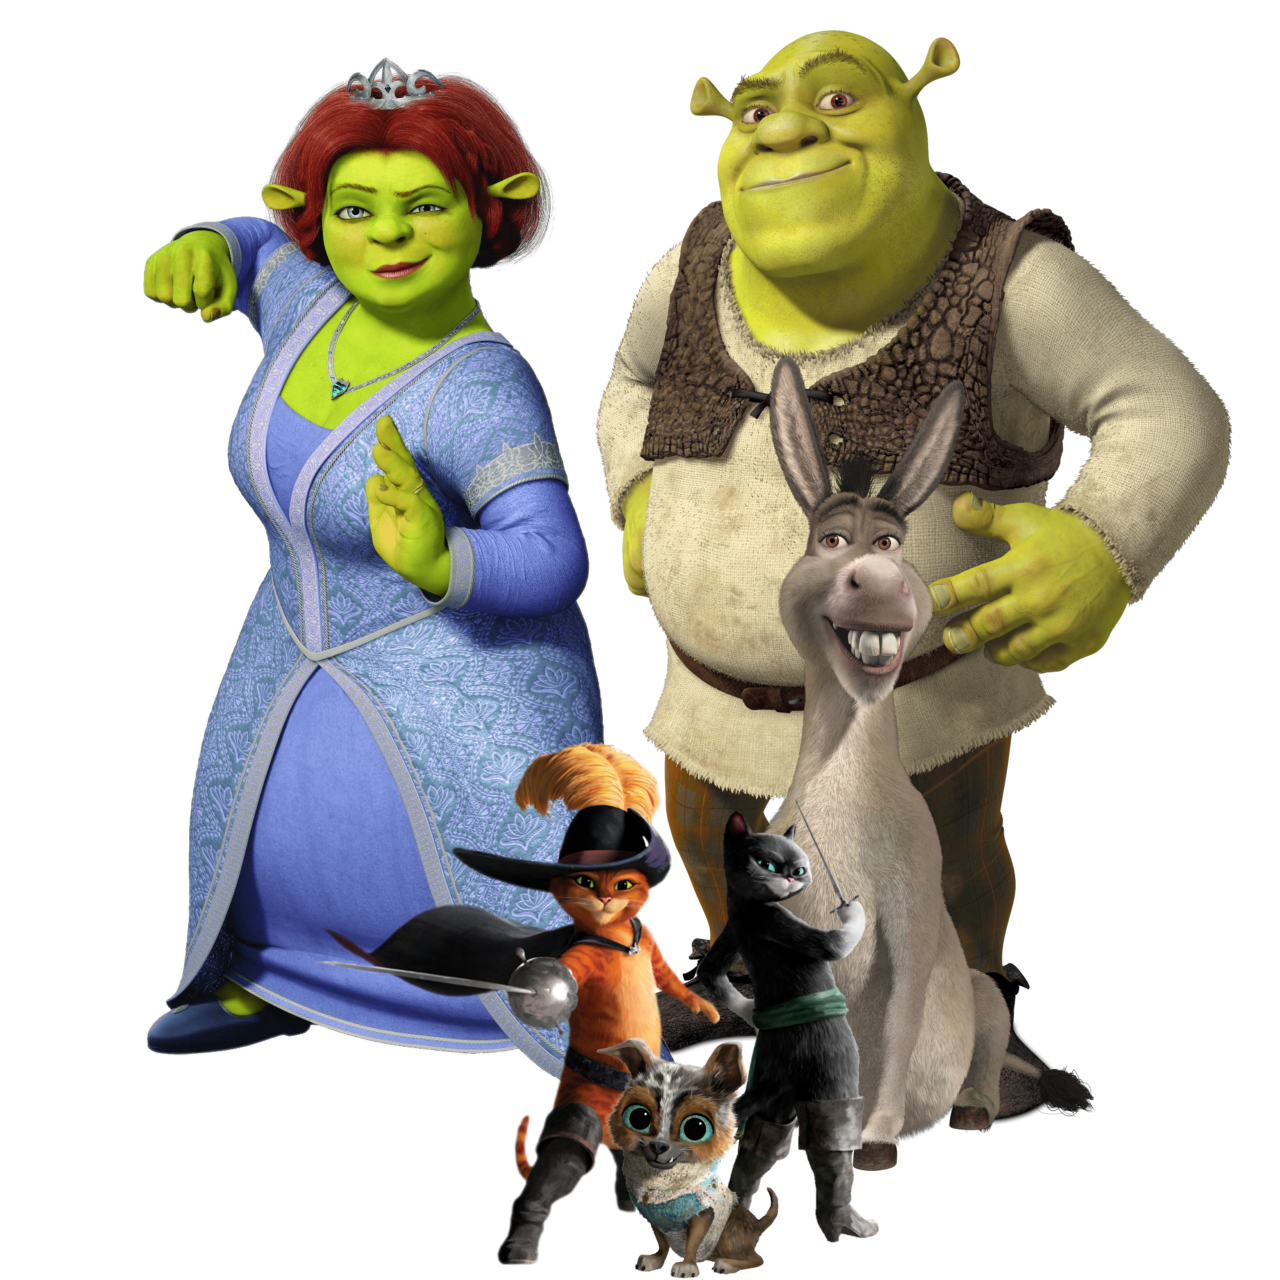 Shrek Characters Png by BlueDreawings20888 on DeviantArt